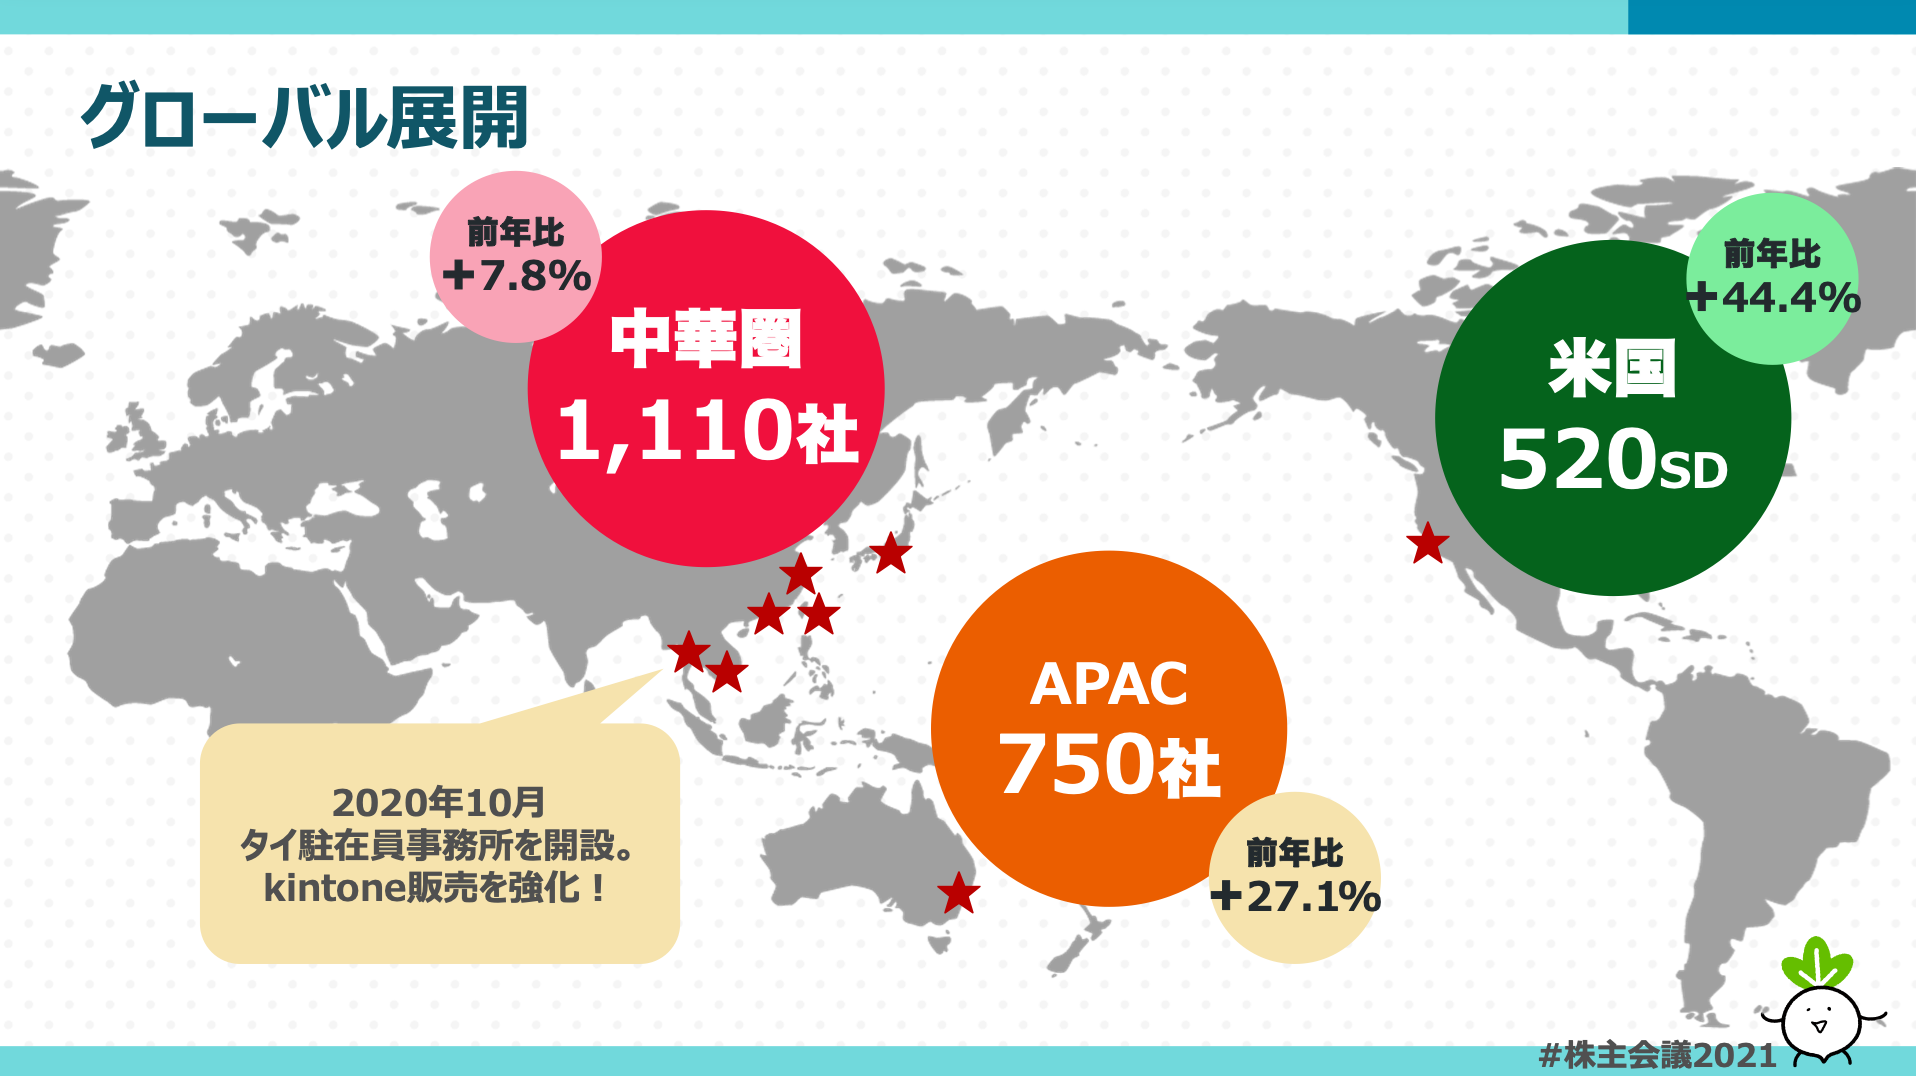 グローバル展開。中華圏 1,100社(前年比+7.8%)。2020年10月タイ駐在員事務所を開設。kintone販売を強化！APAC 750社(前年比27.1%)。米国520SD(前年比+44.4%)。